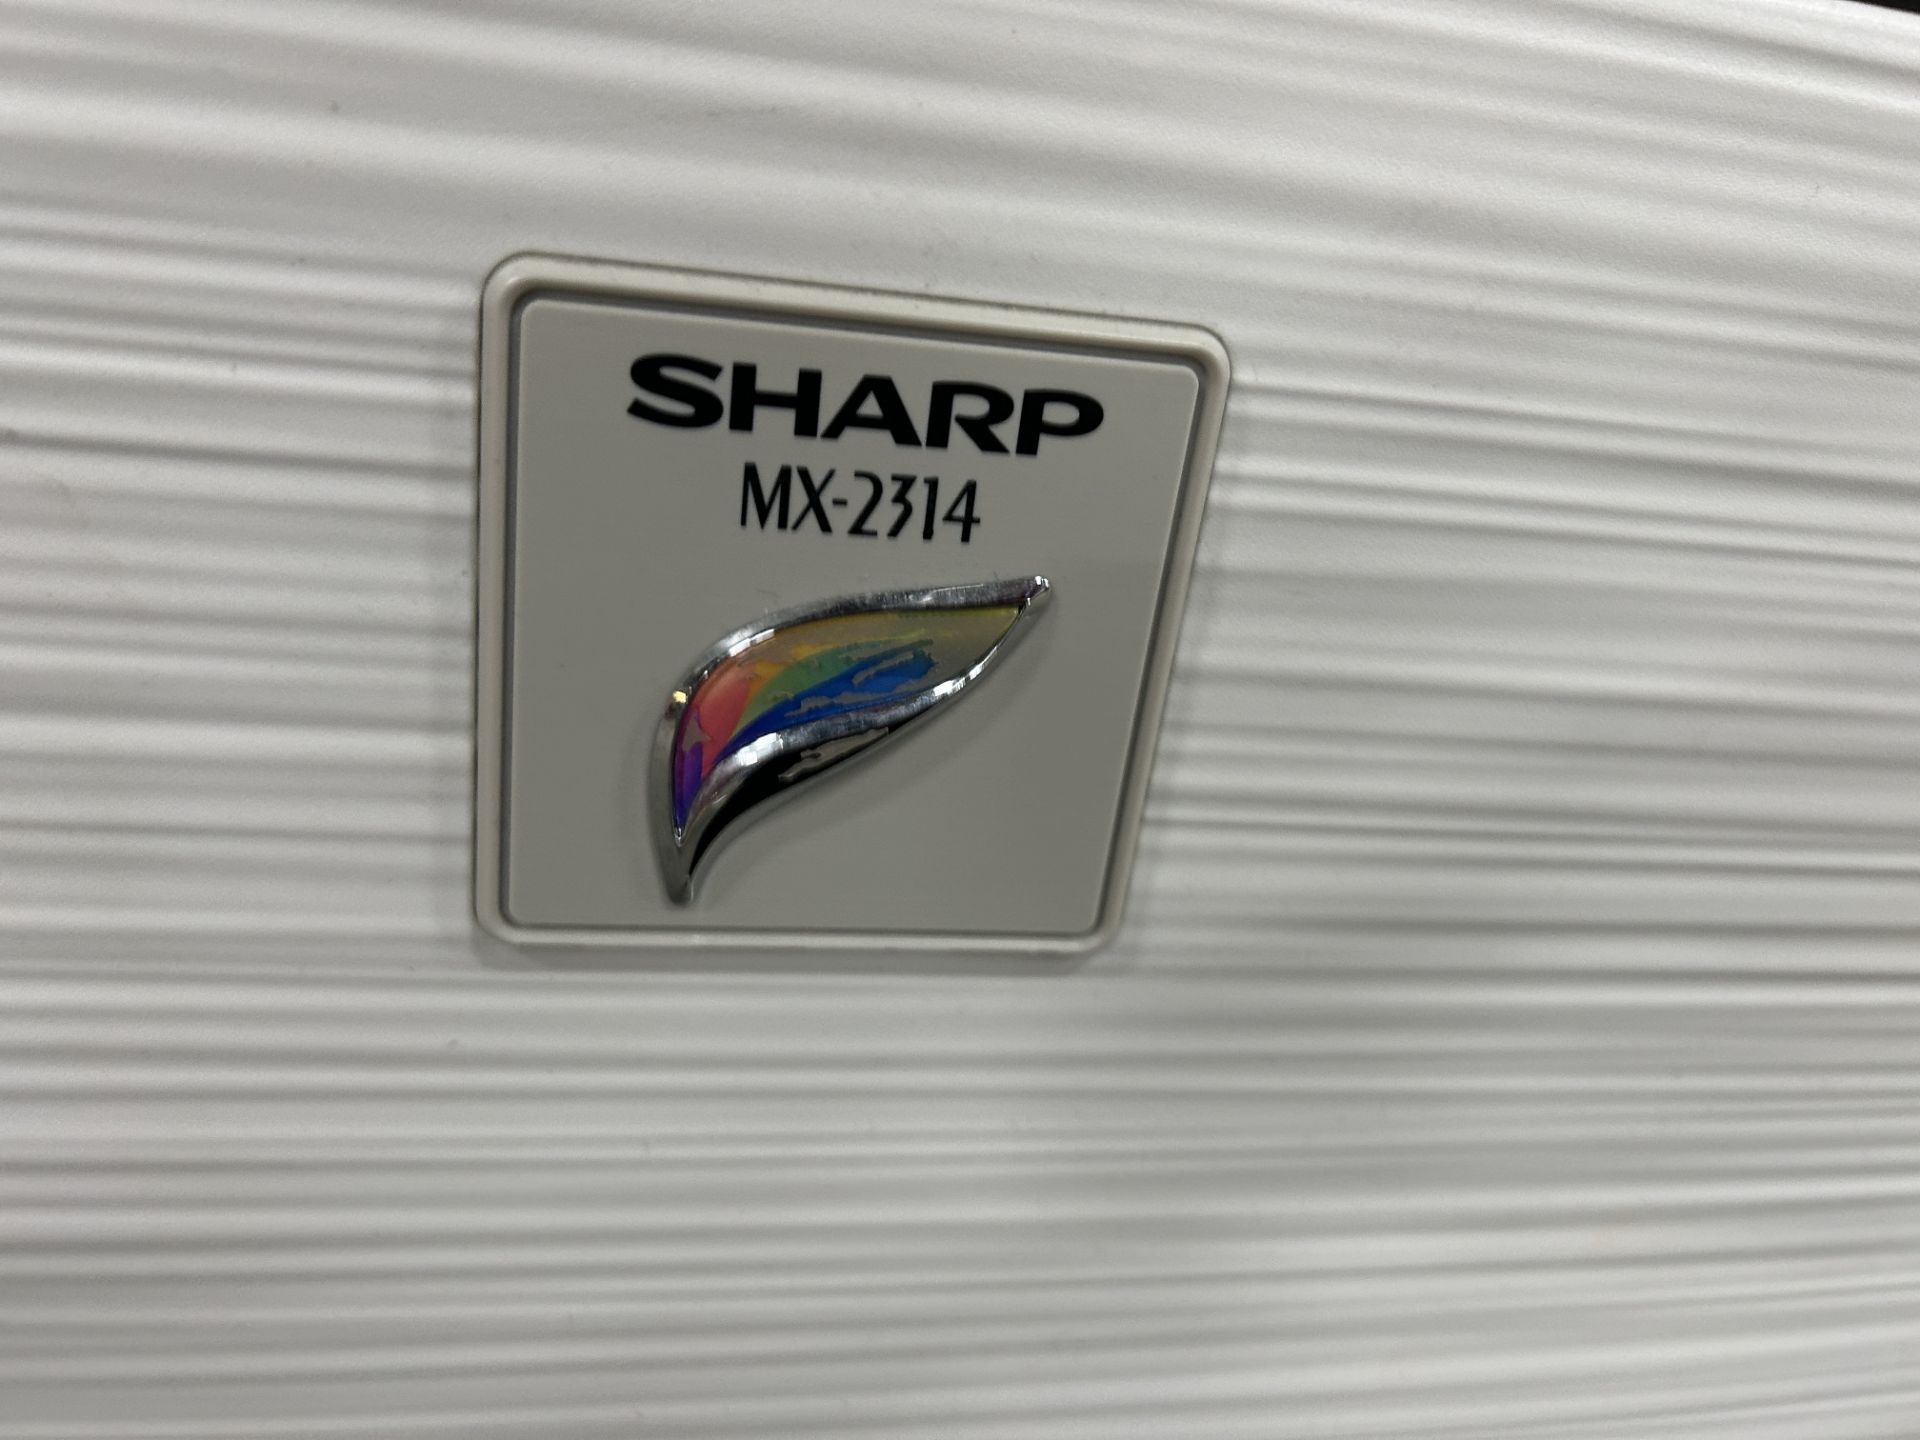 Sharp MX-2314 copier - Image 4 of 8